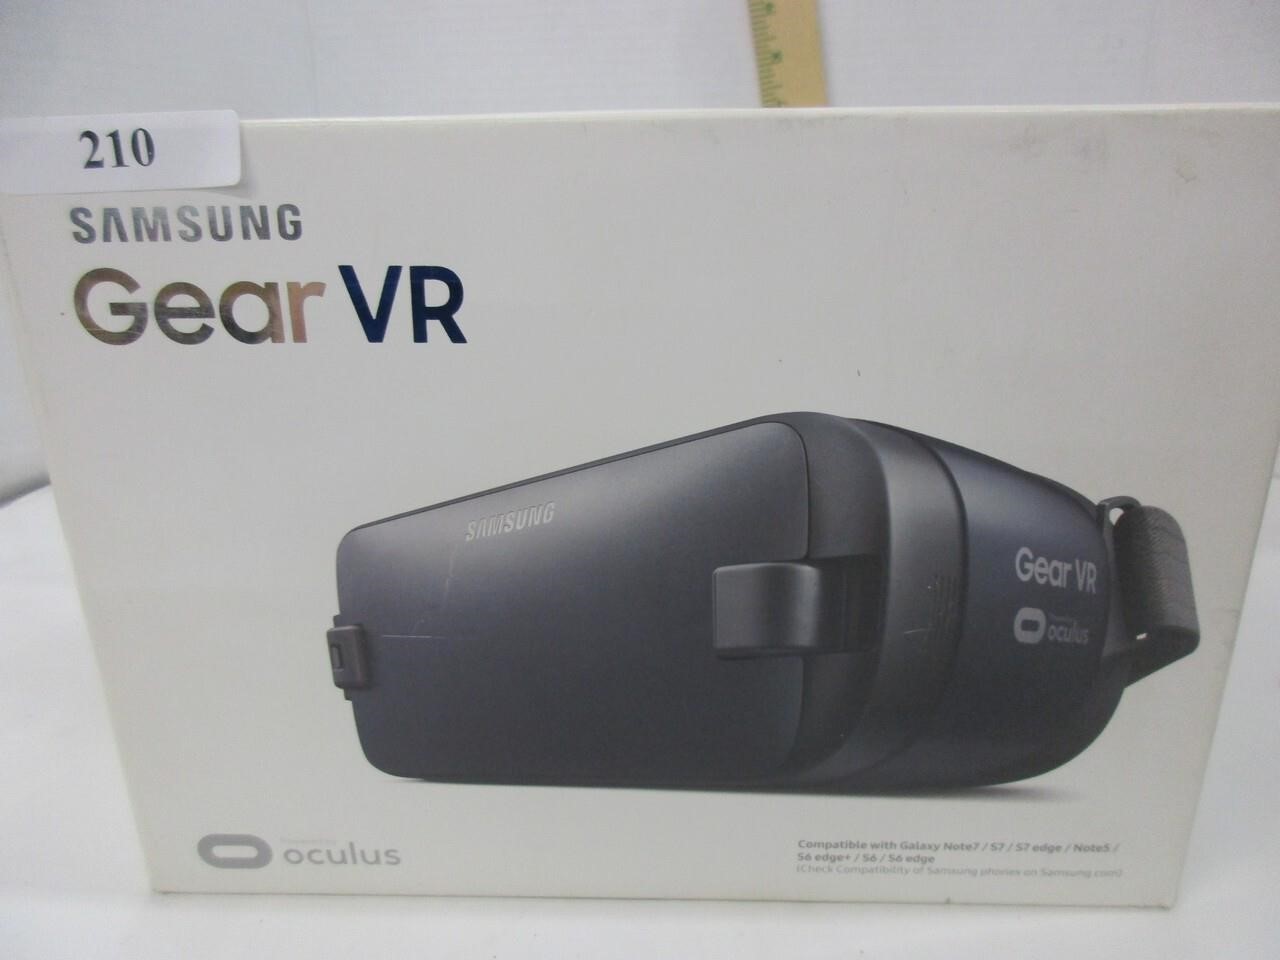 Oculus powered VRgear